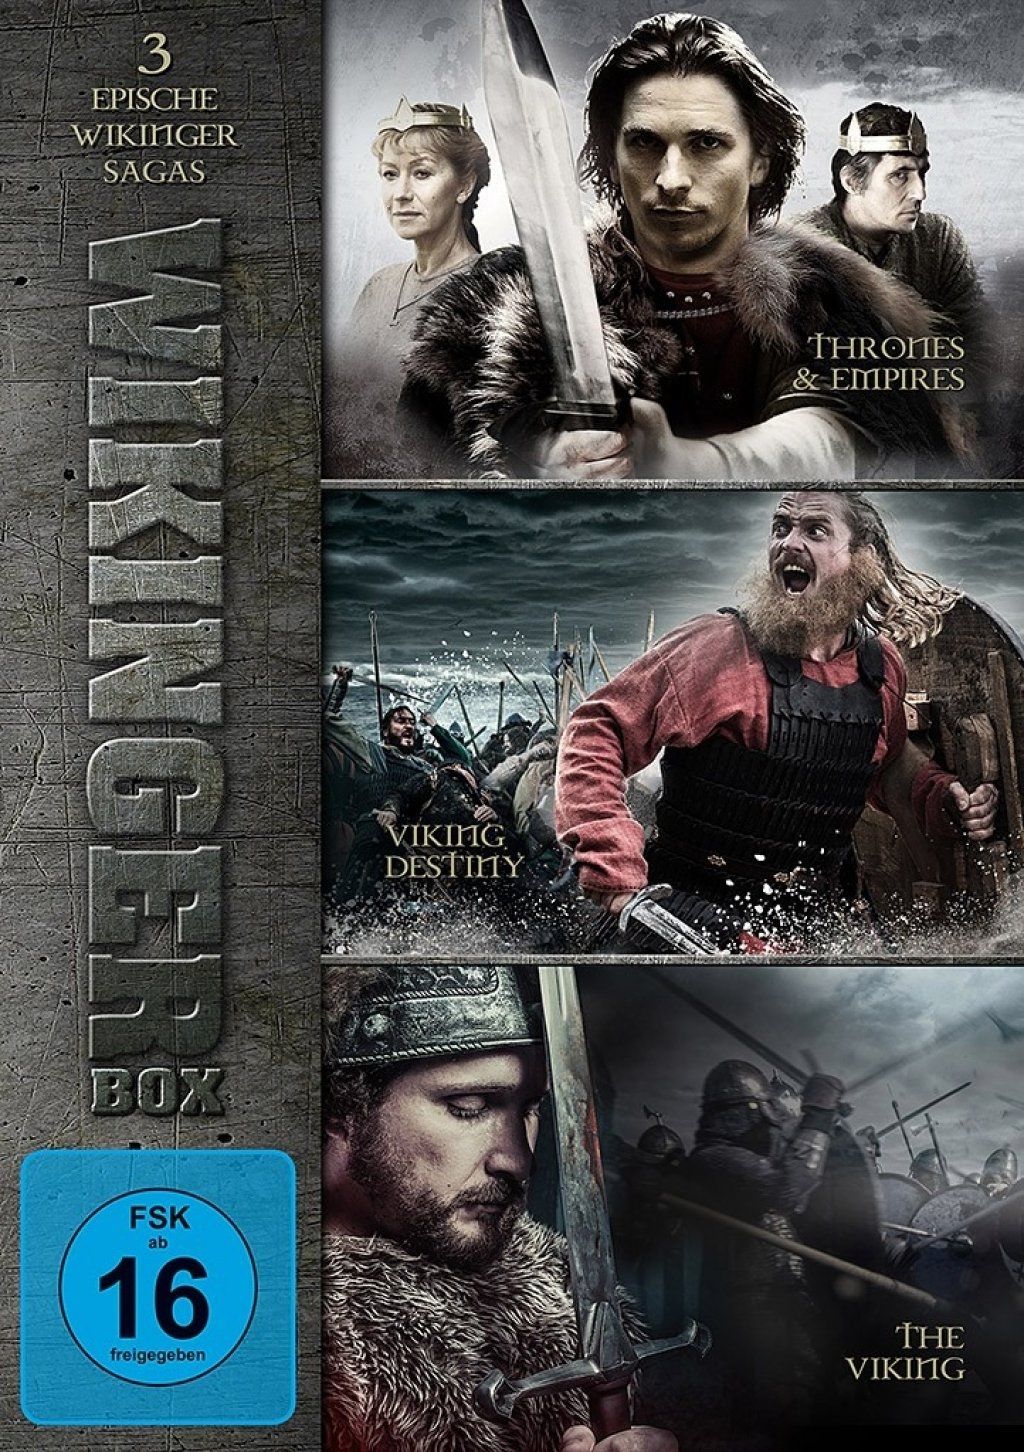 Thrones & Empires / Viking Destiny / The Viking (Wikinger Box) (3 Discs)